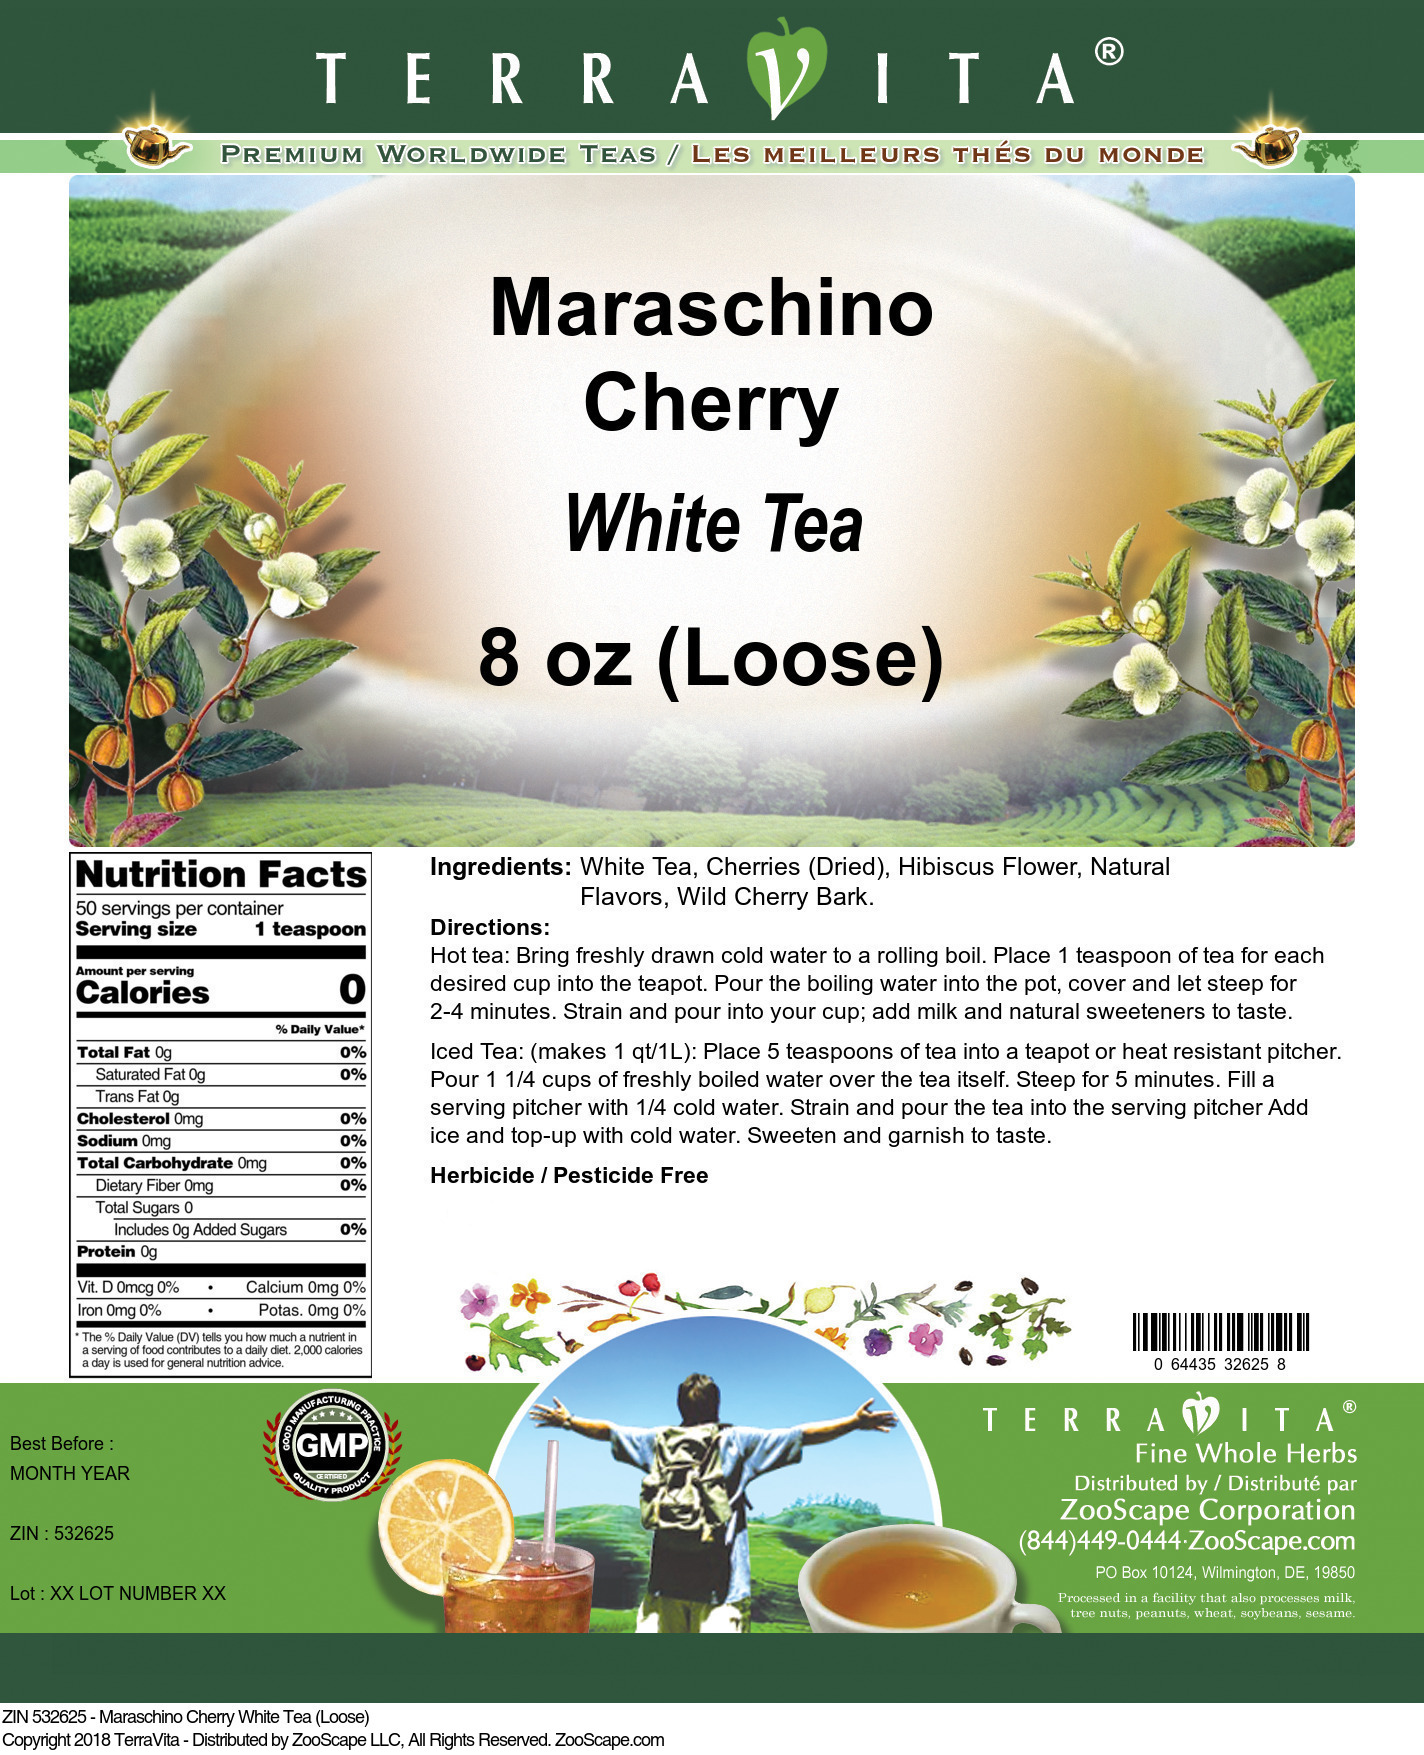 Maraschino Cherry White Tea (Loose) - Label